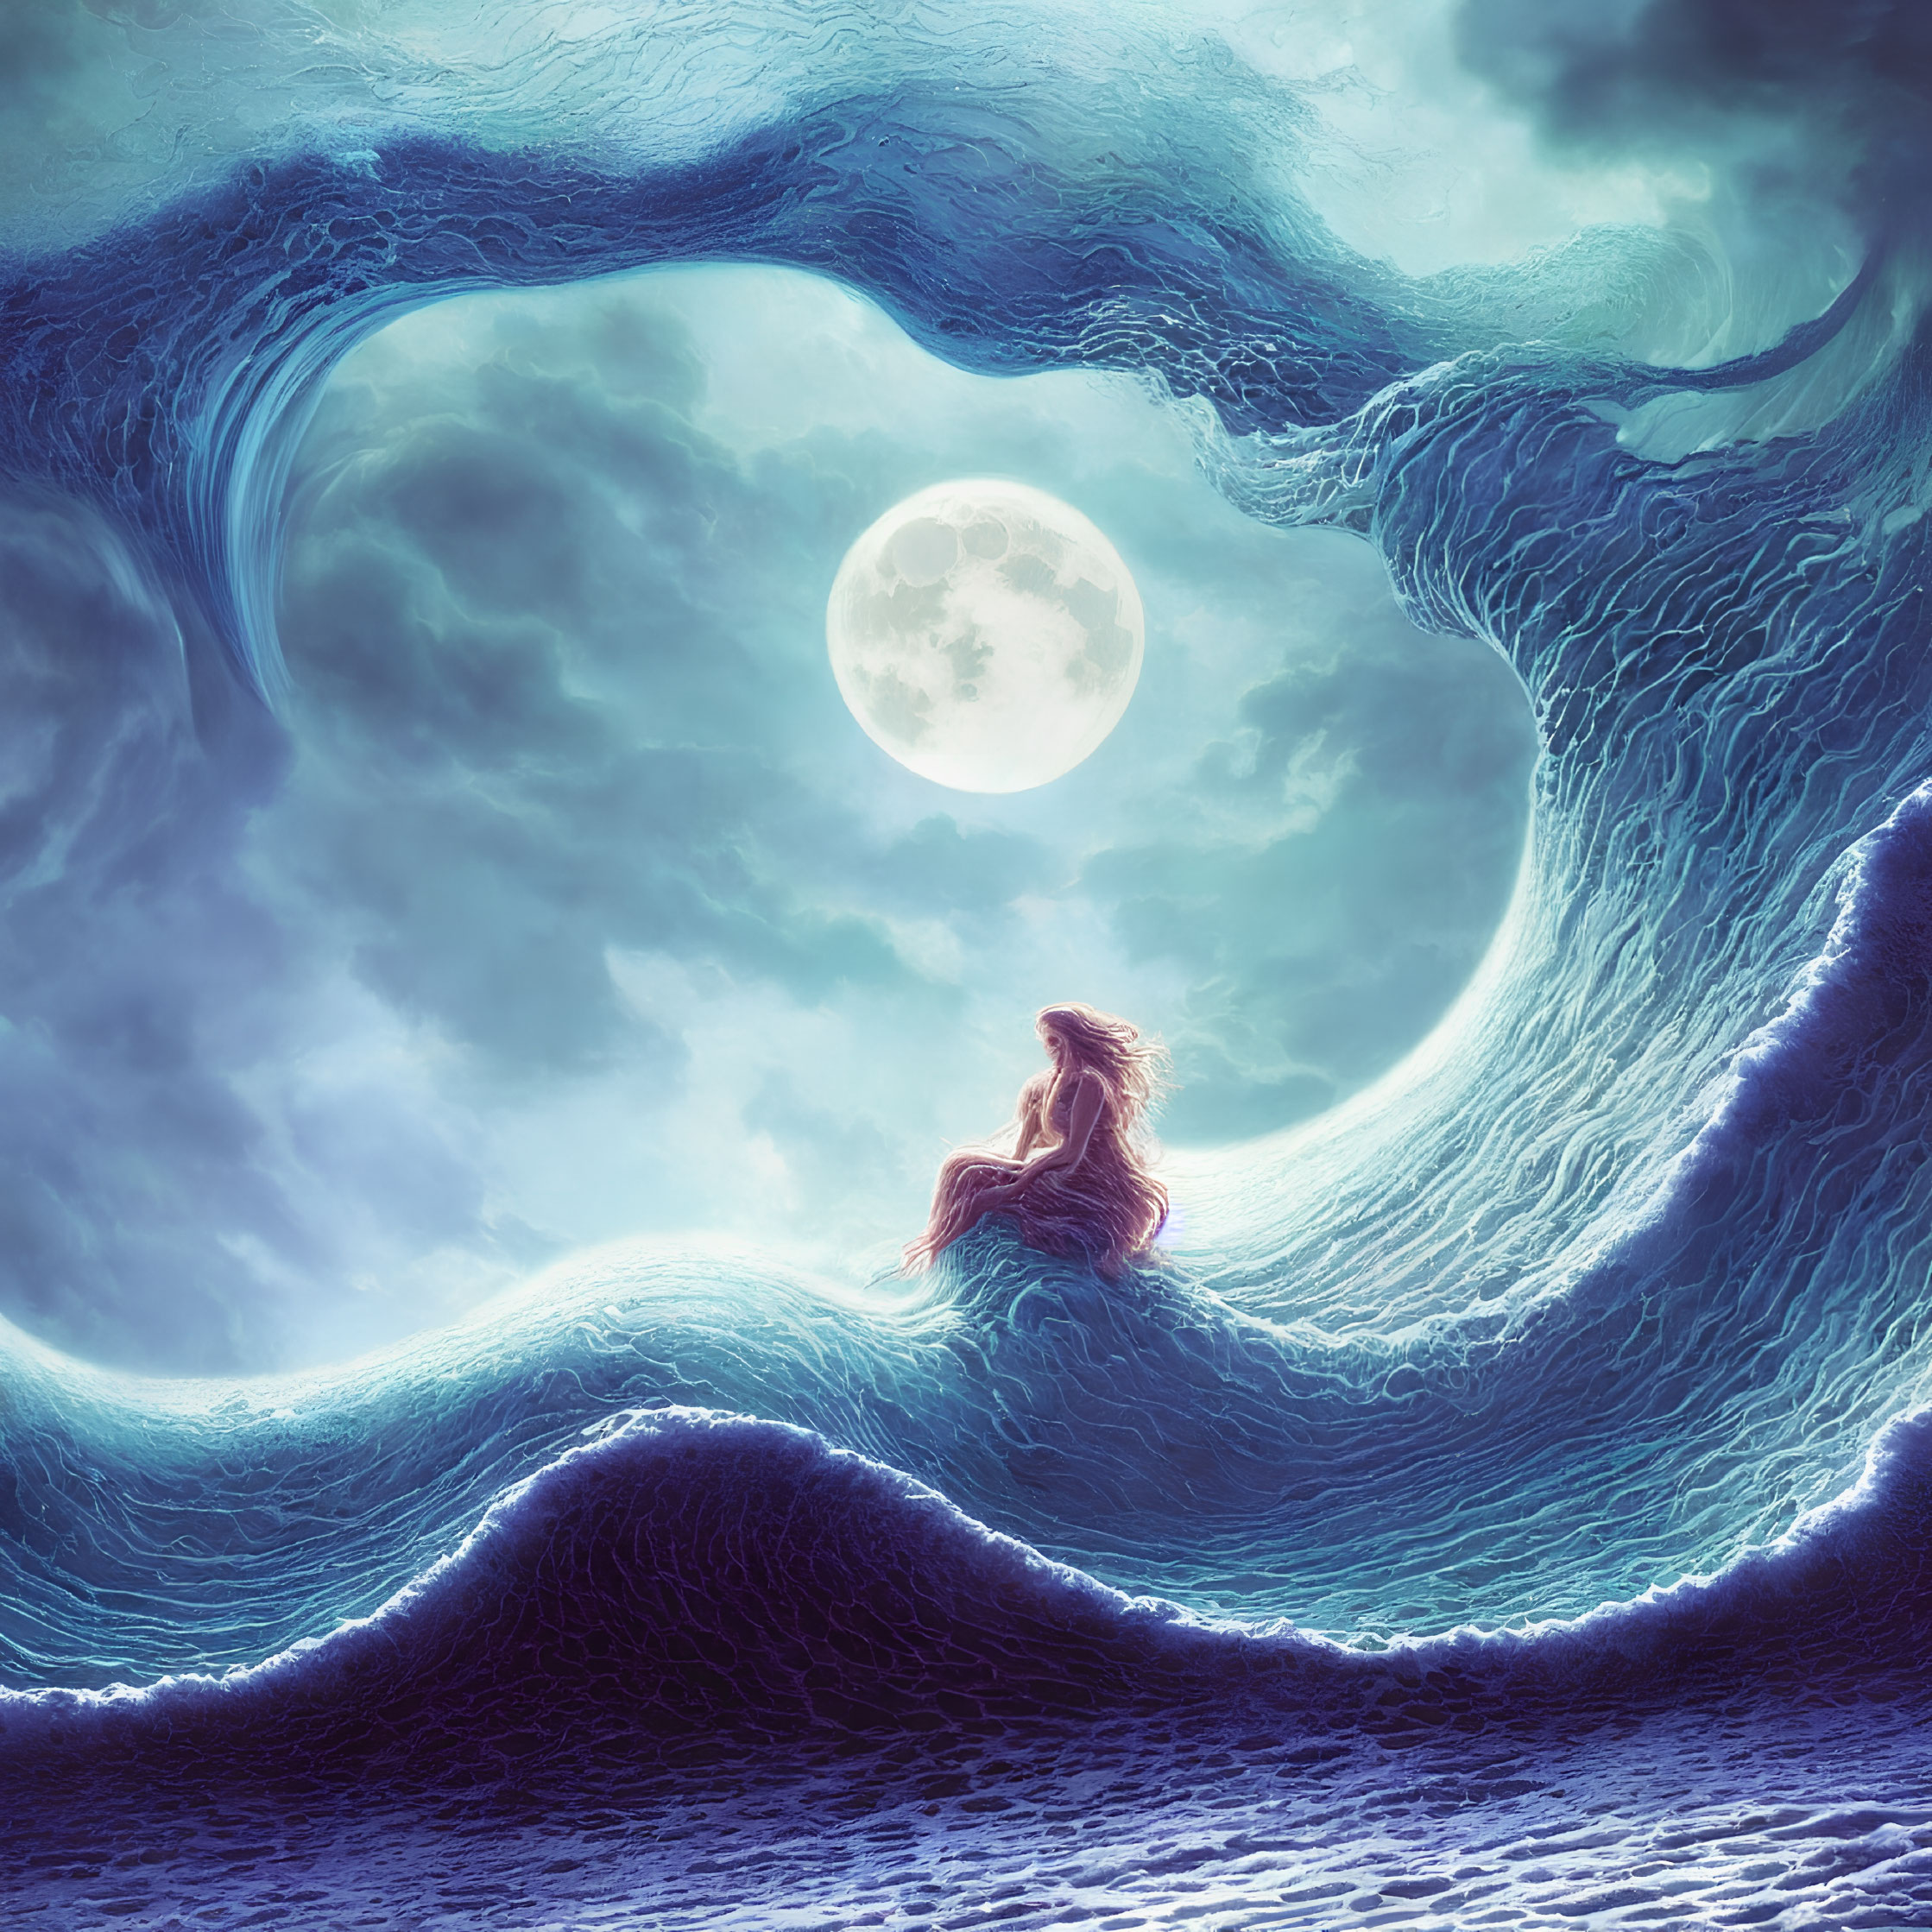 Surreal image: Woman on wave under moonlit sky